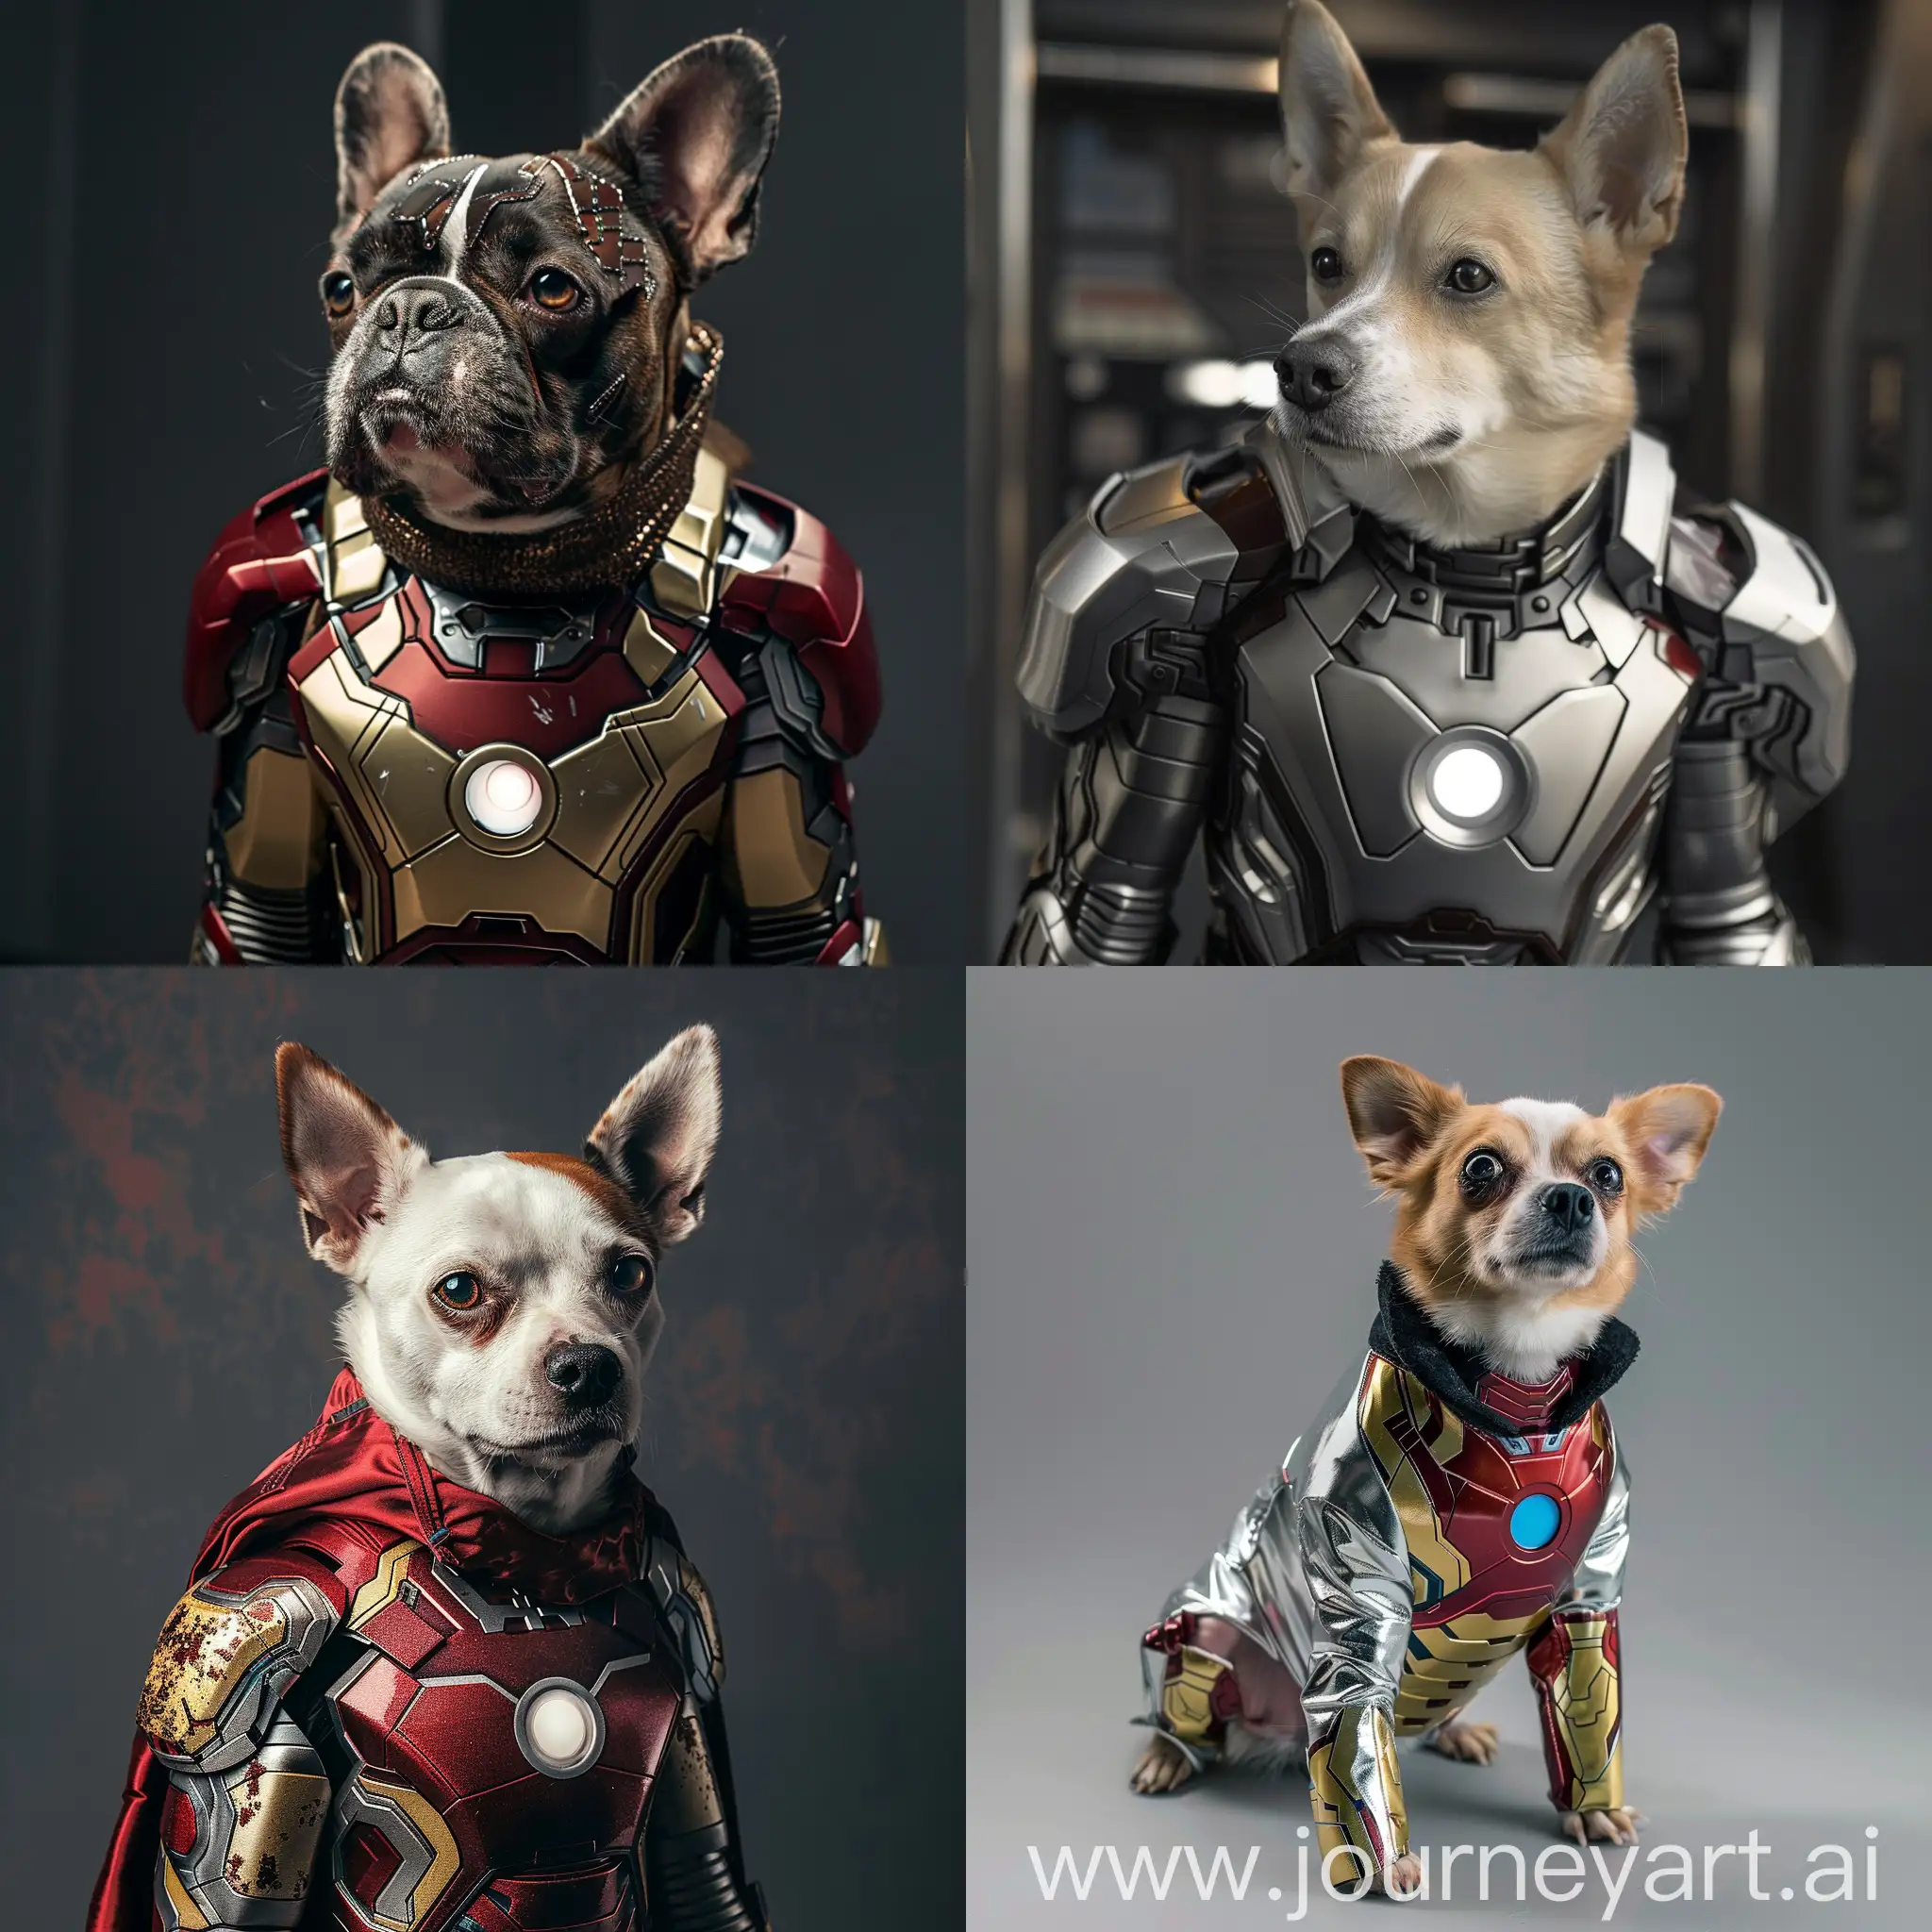 Canine-Cosplaying-as-Ironman-in-Shiny-Metallic-Armor